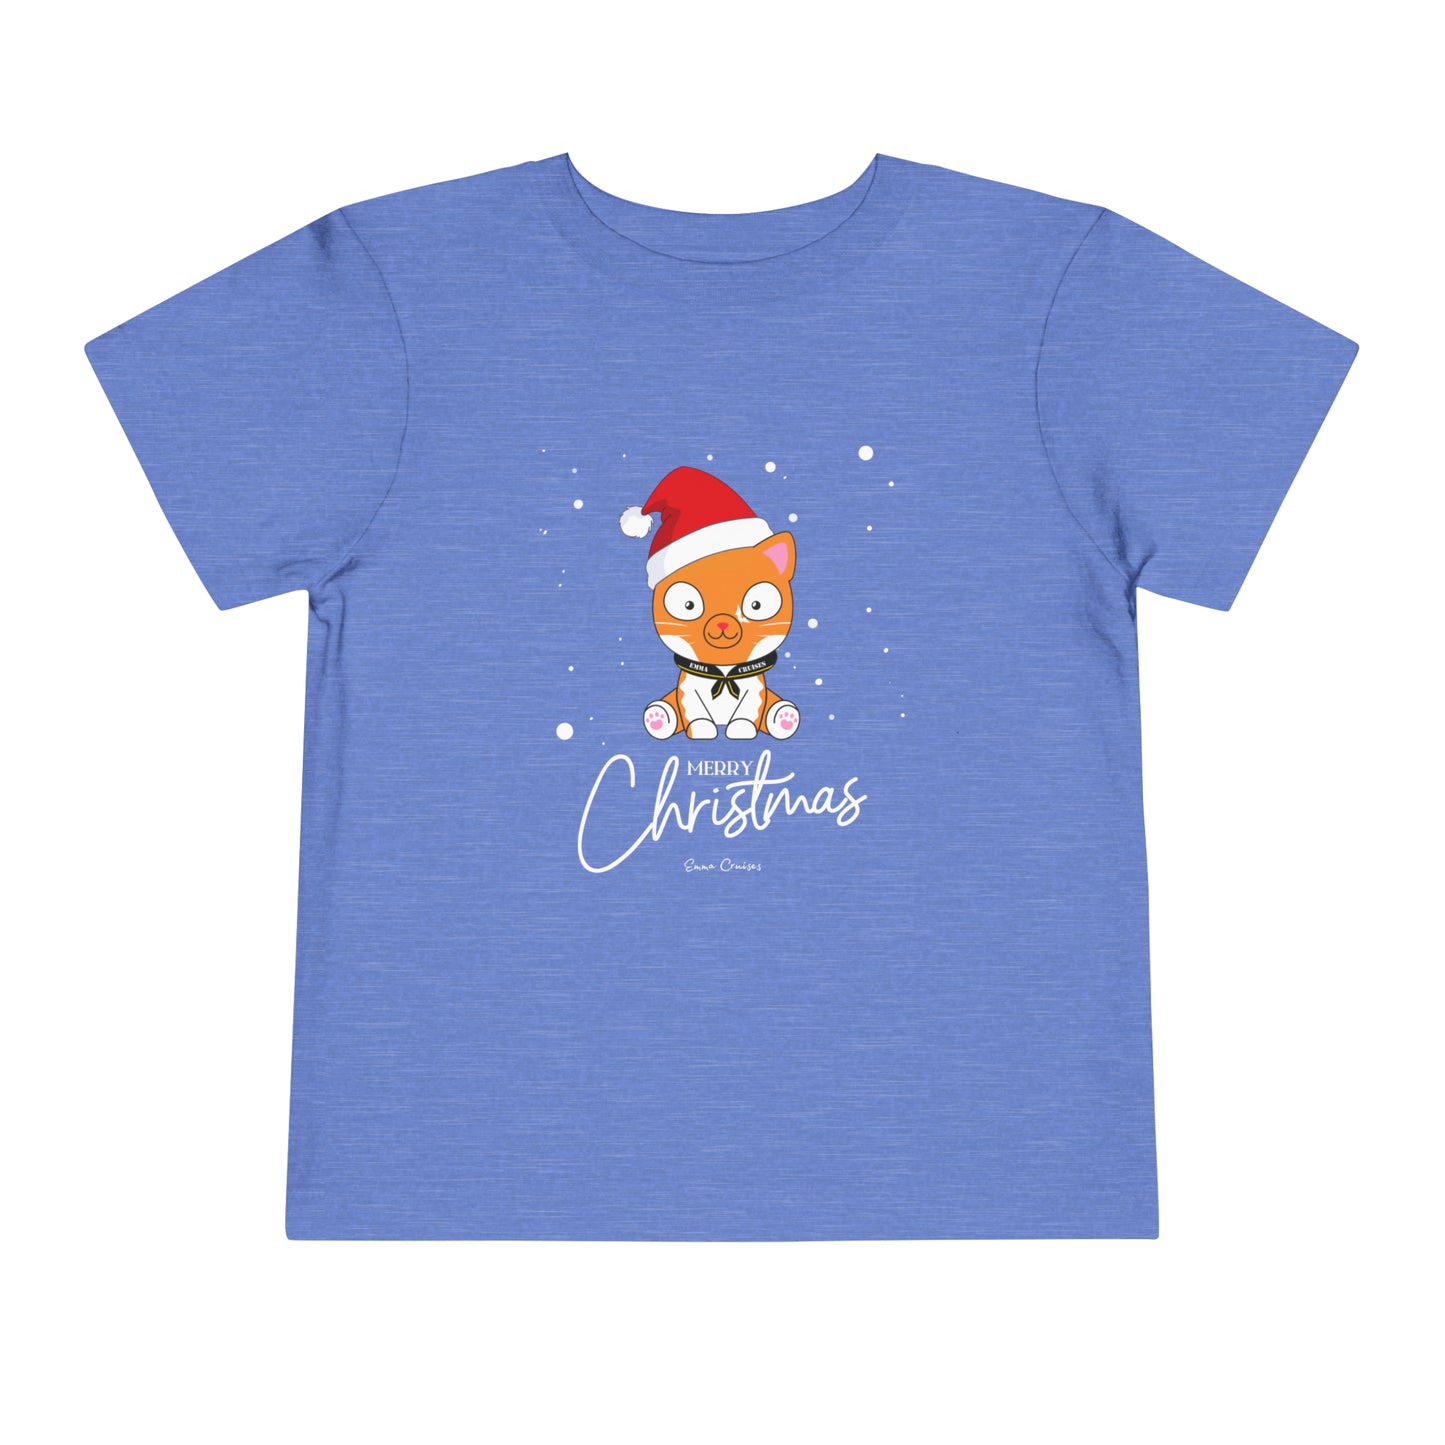 Merry Christmas - Toddler UNISEX T-Shirt